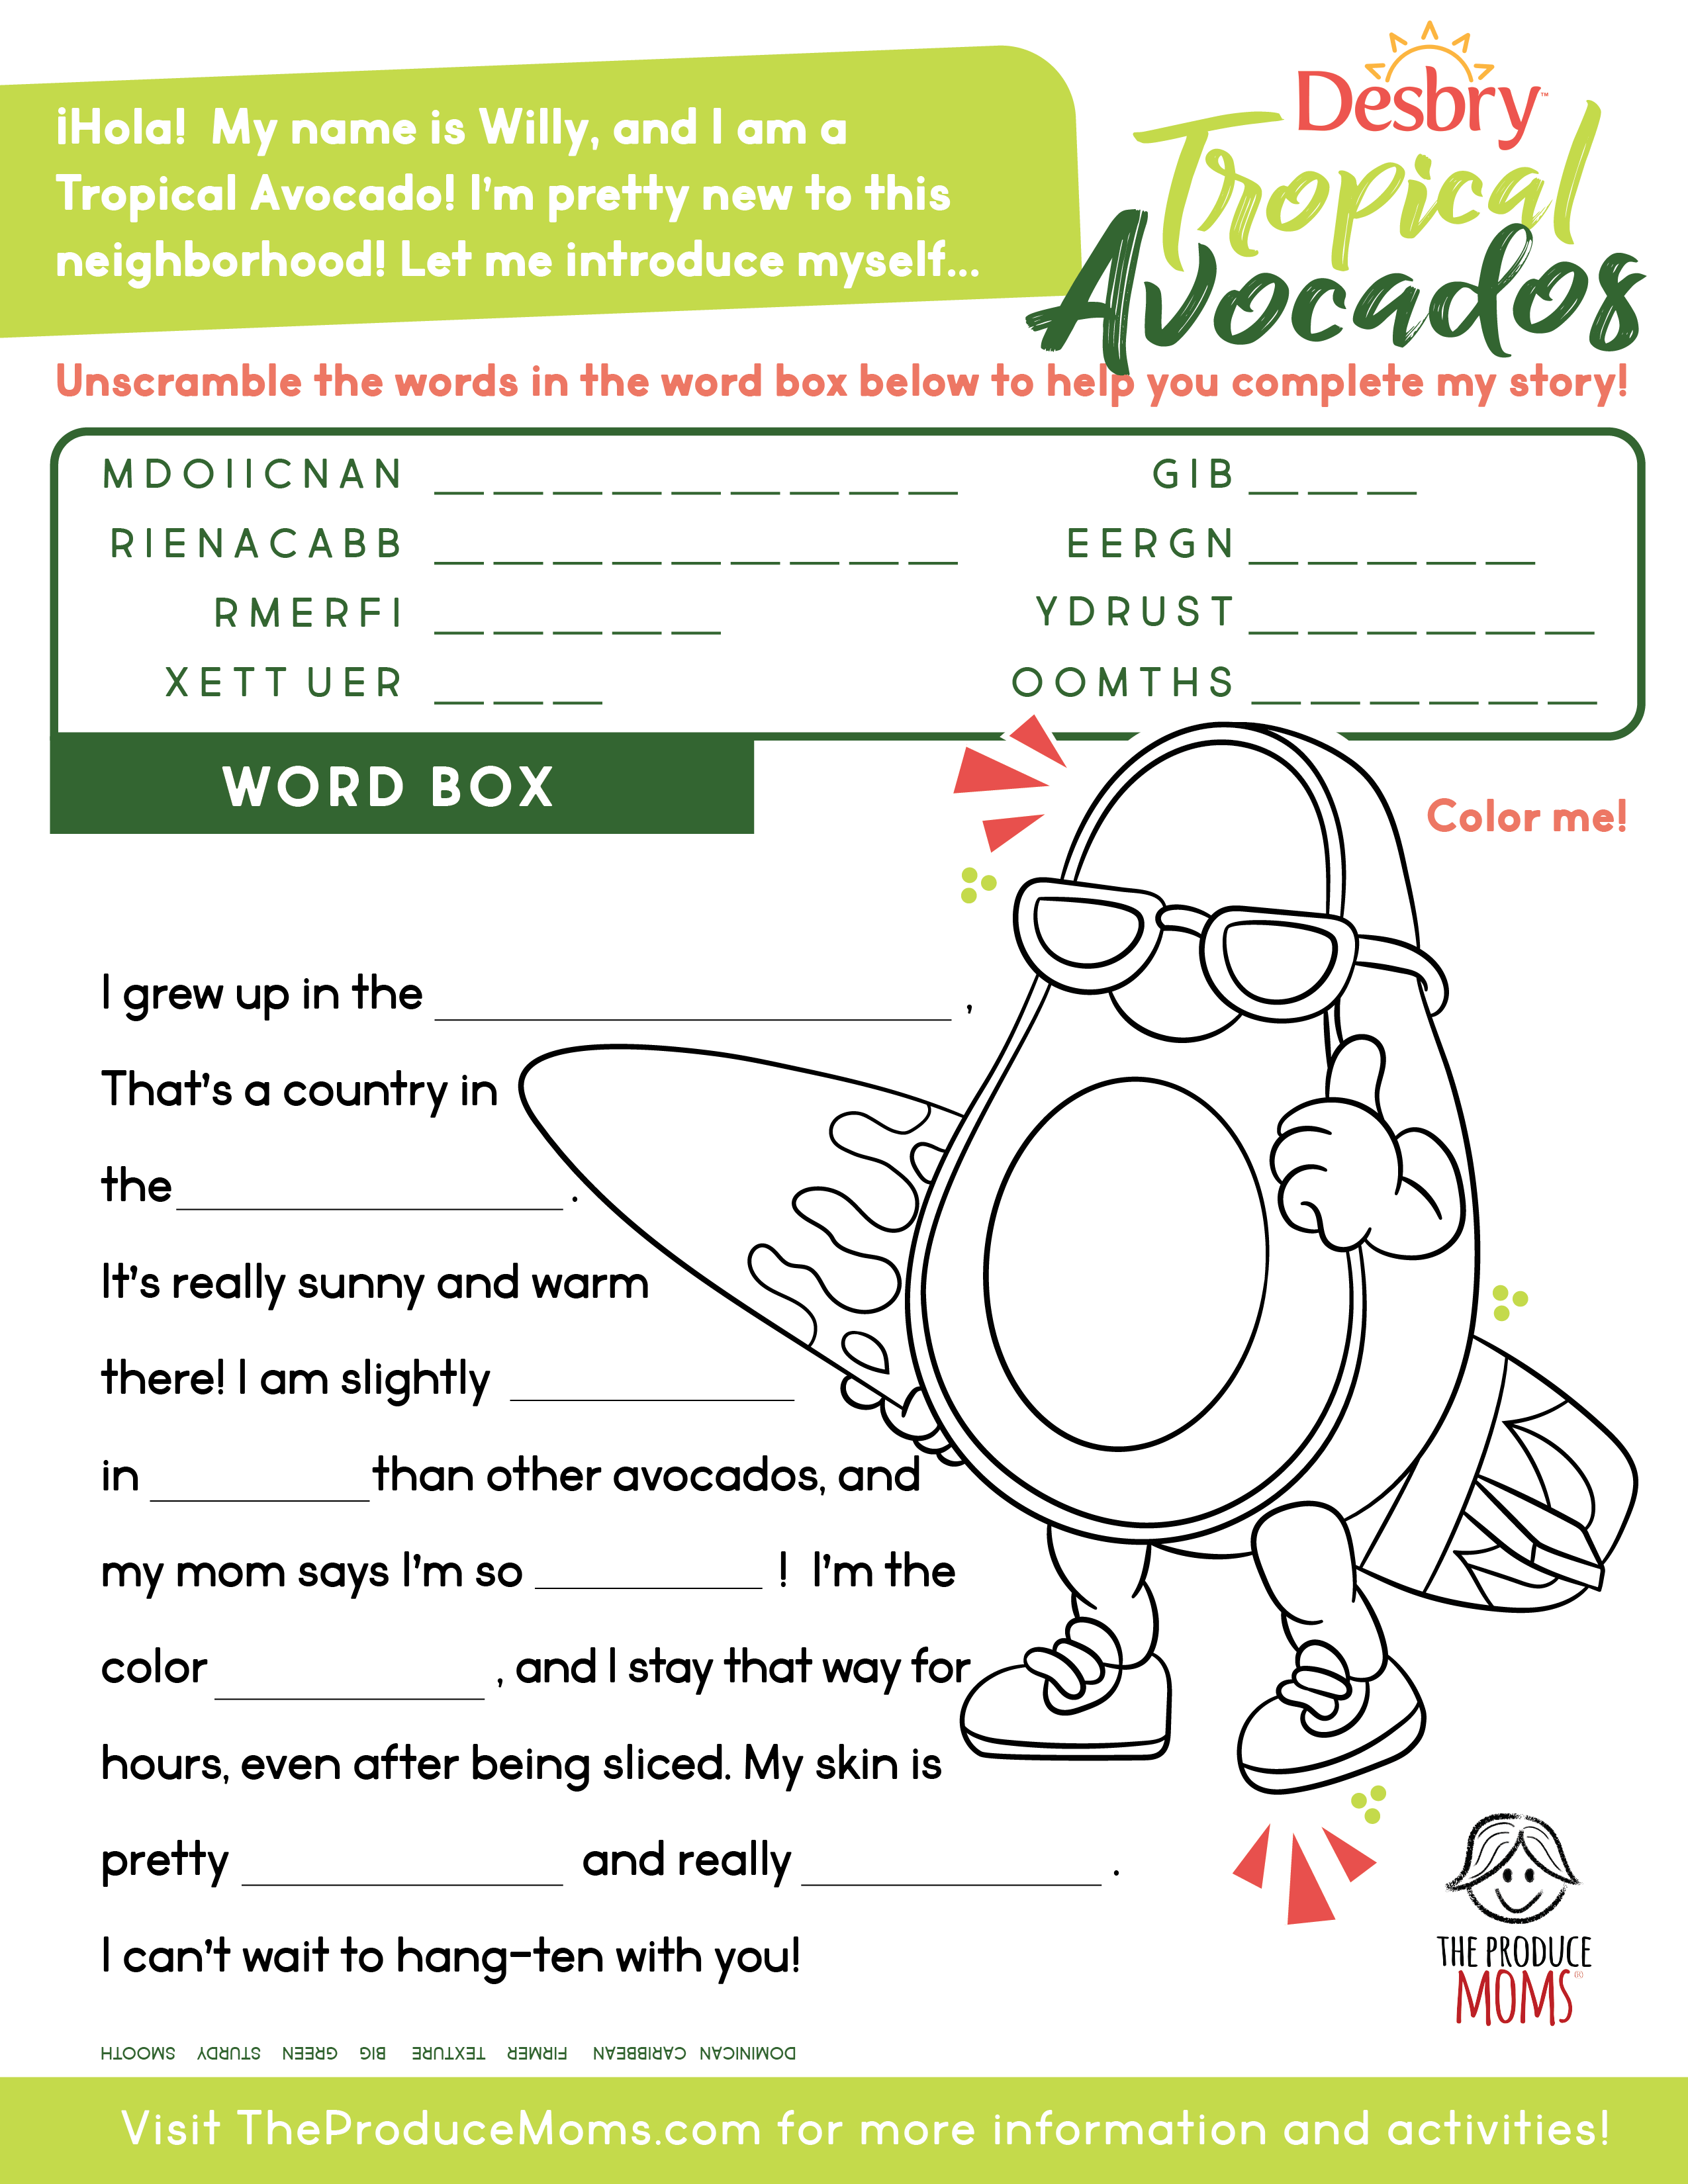 Avocado activity sheet